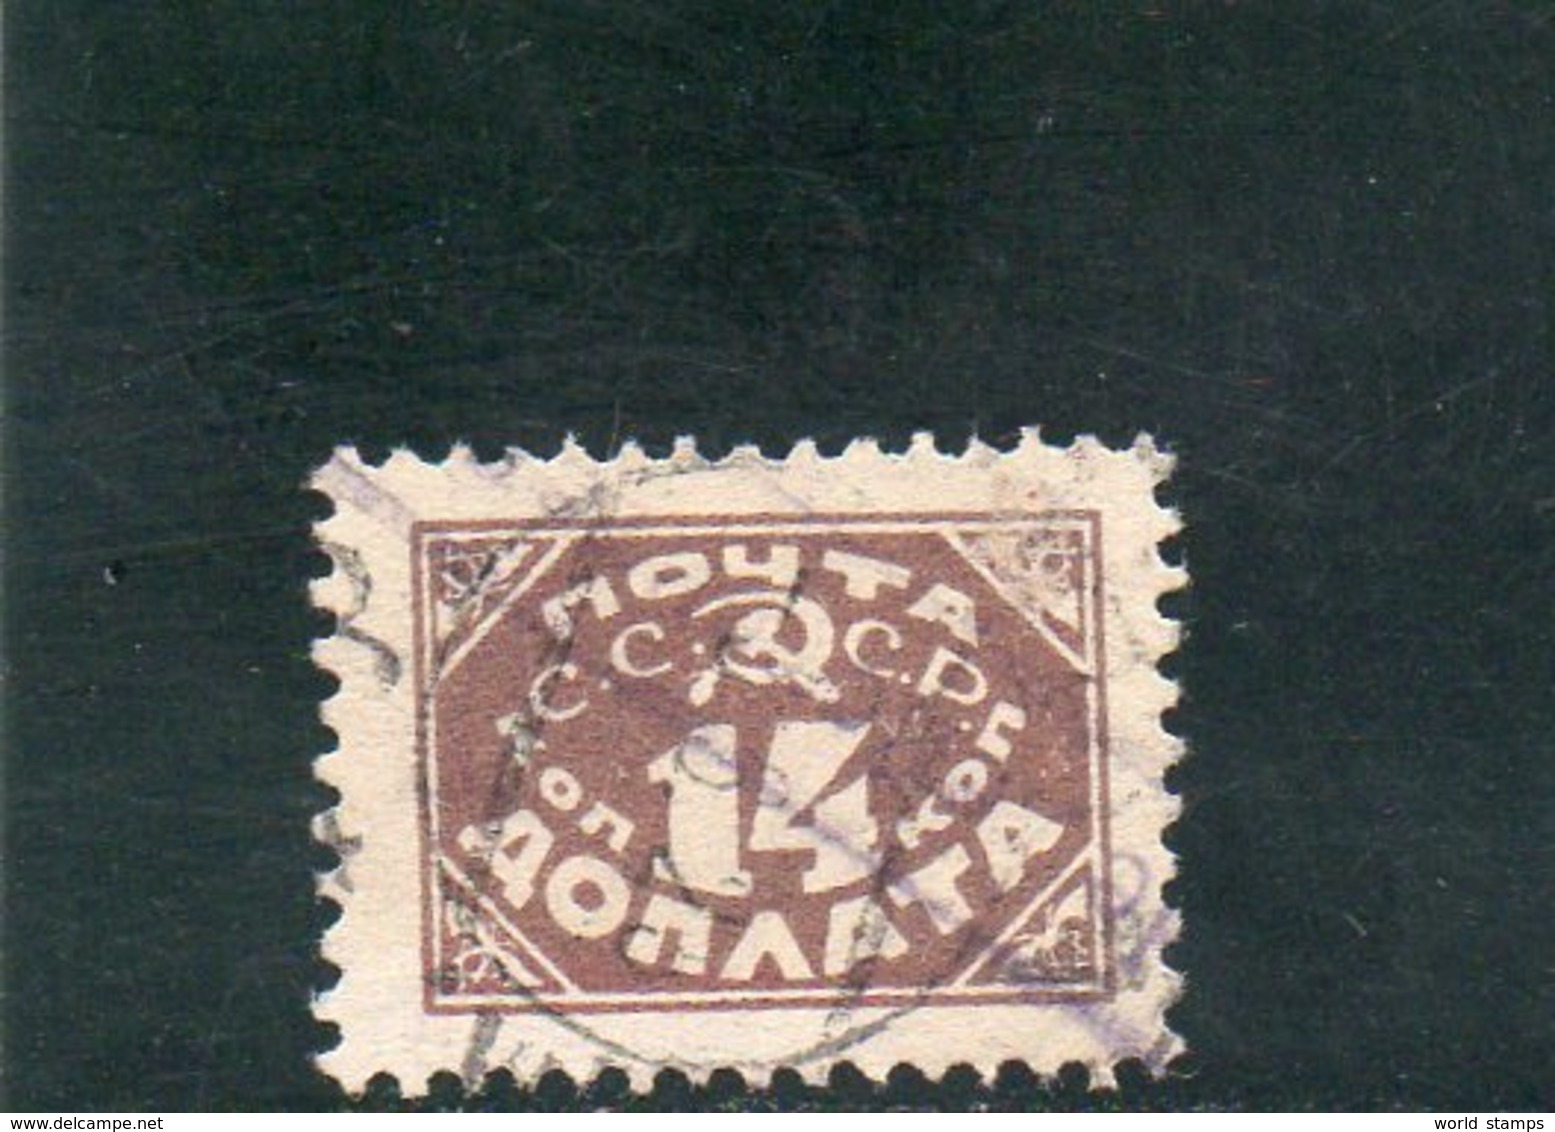 URSS 1925 O SANS FILIGRANE - Postage Due